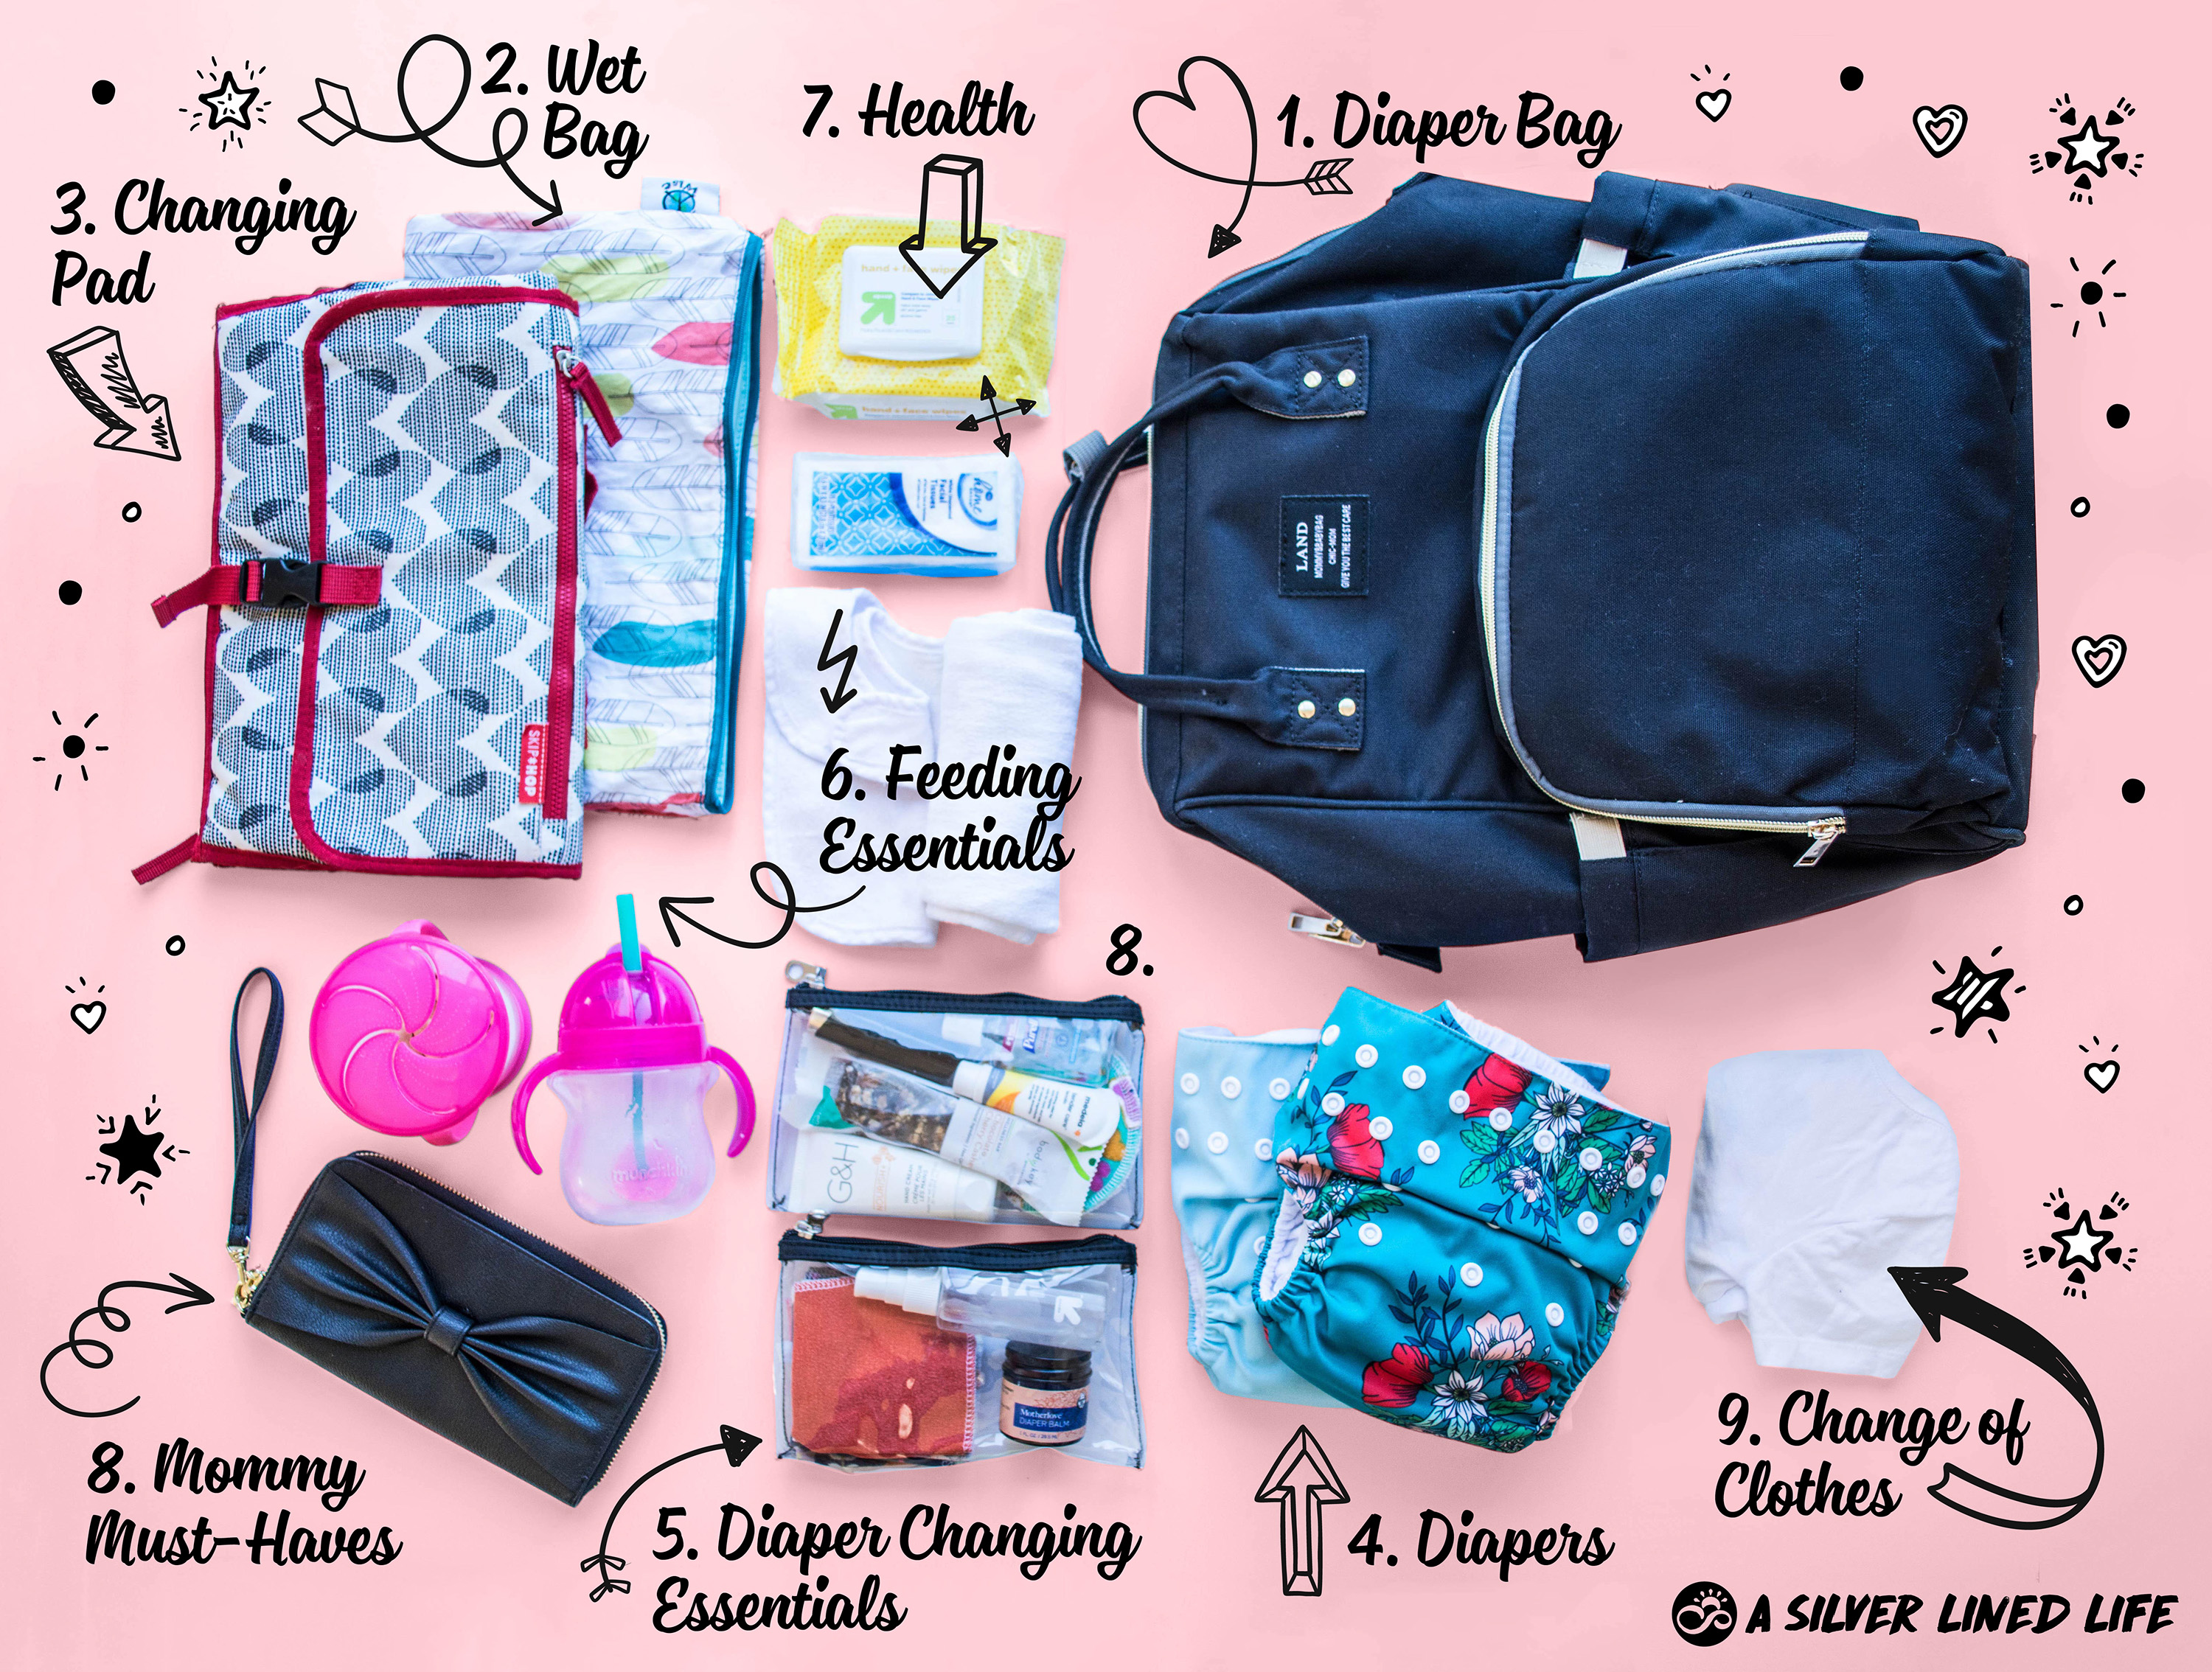 14 diaper bag essentials: What to pack in a diaper bag checklist